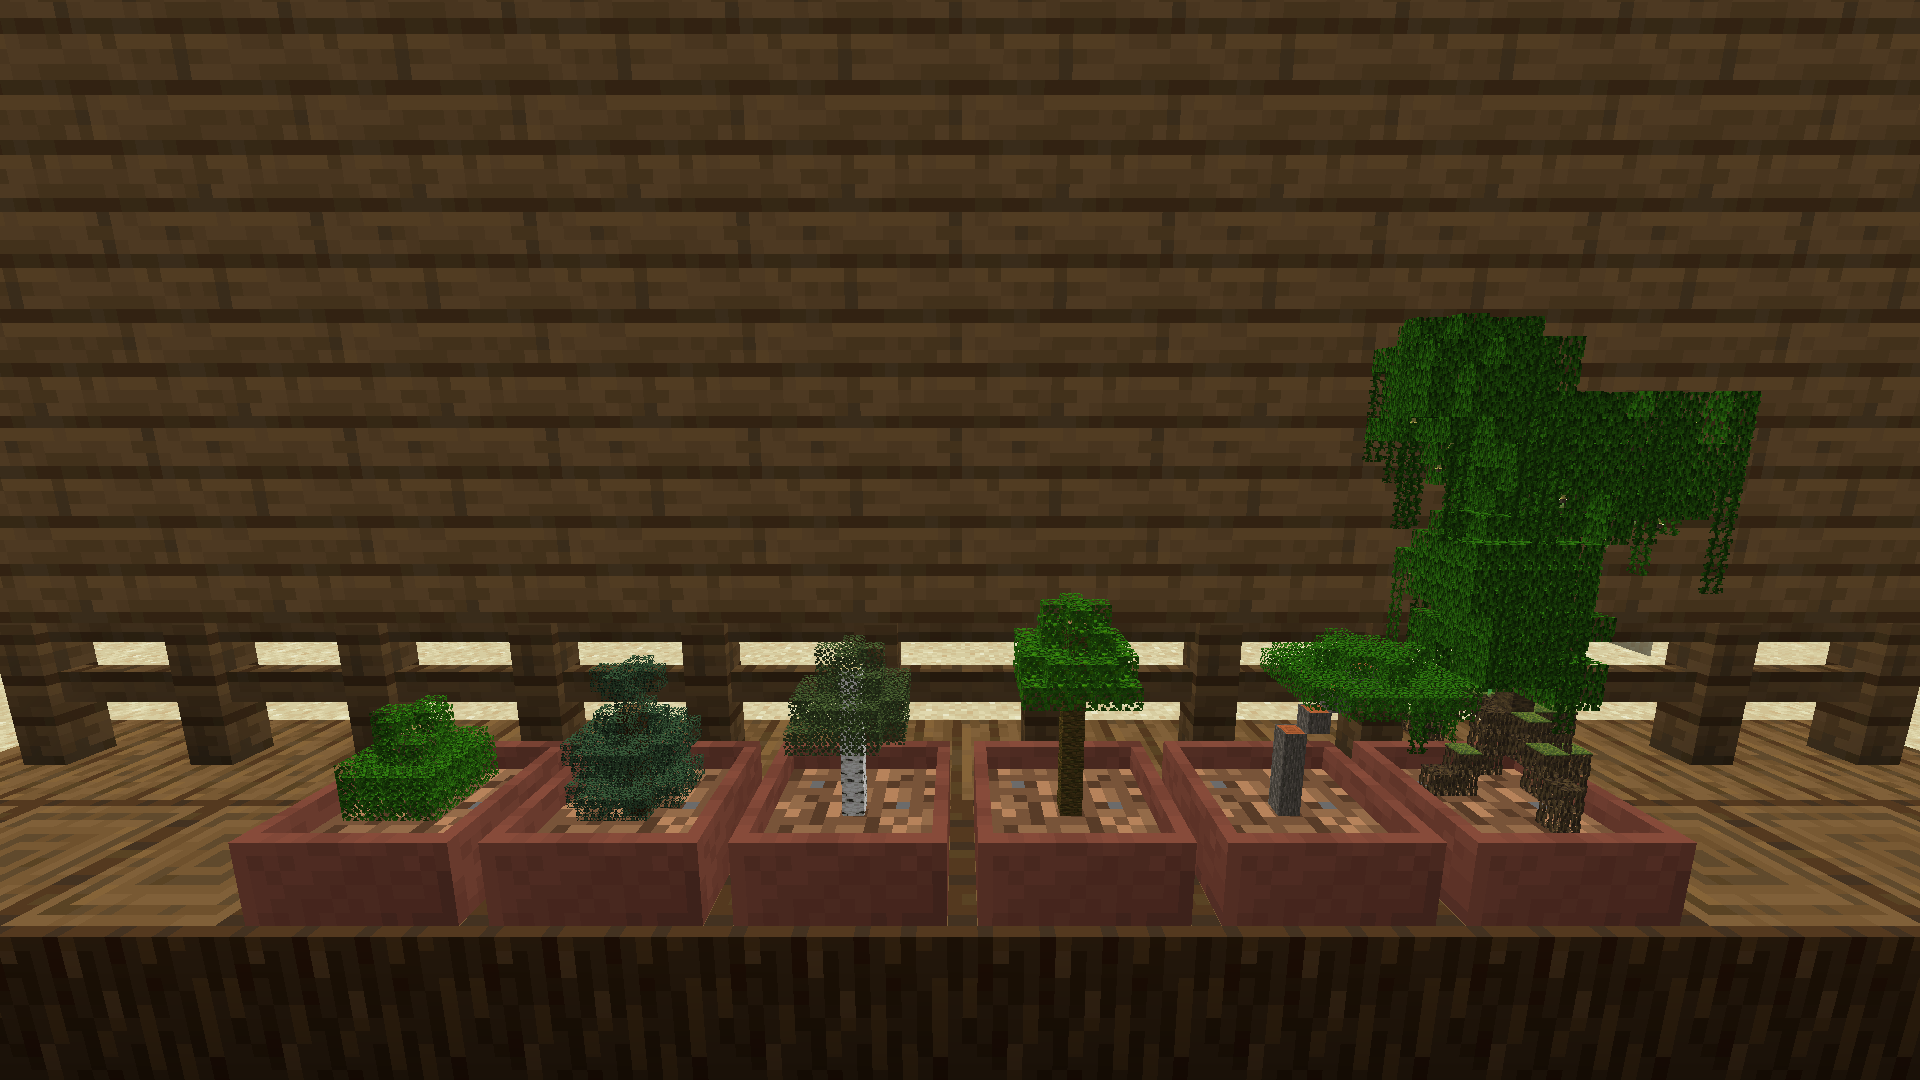 All vanilla saplings except dark oak growing in pots